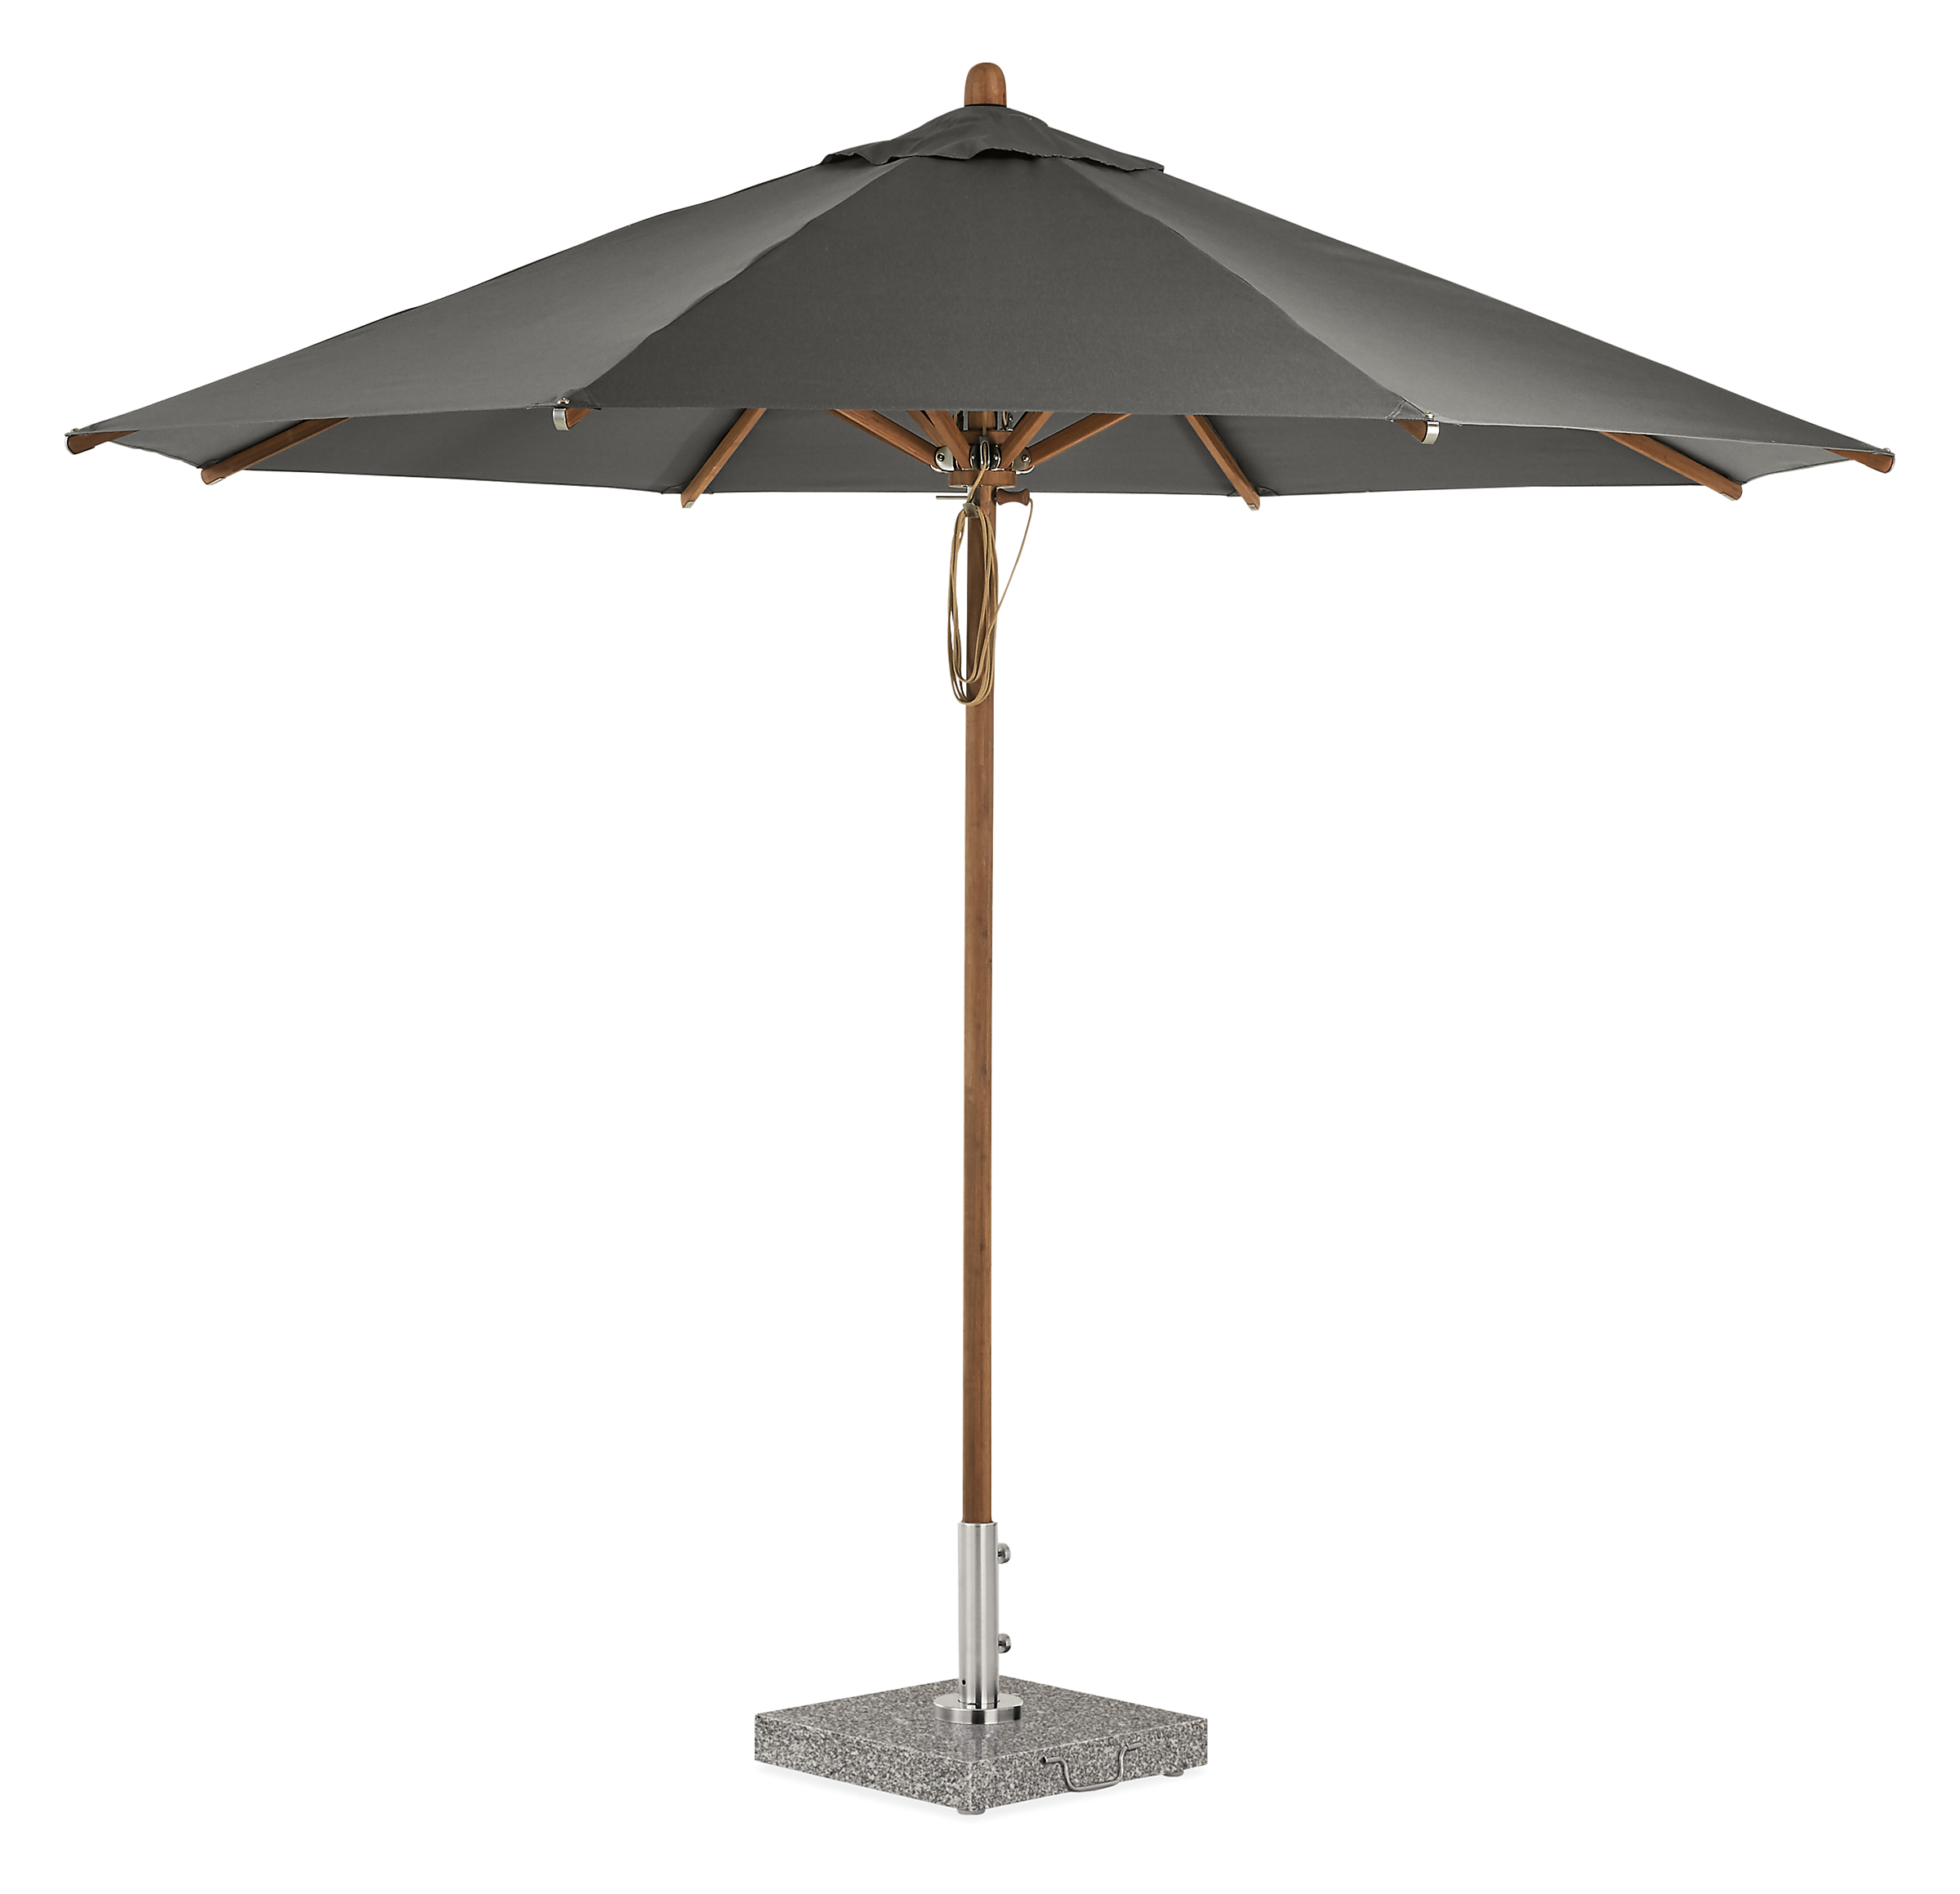 Cirro 10' Patio Umbrella in Grey with Bamboo Pole